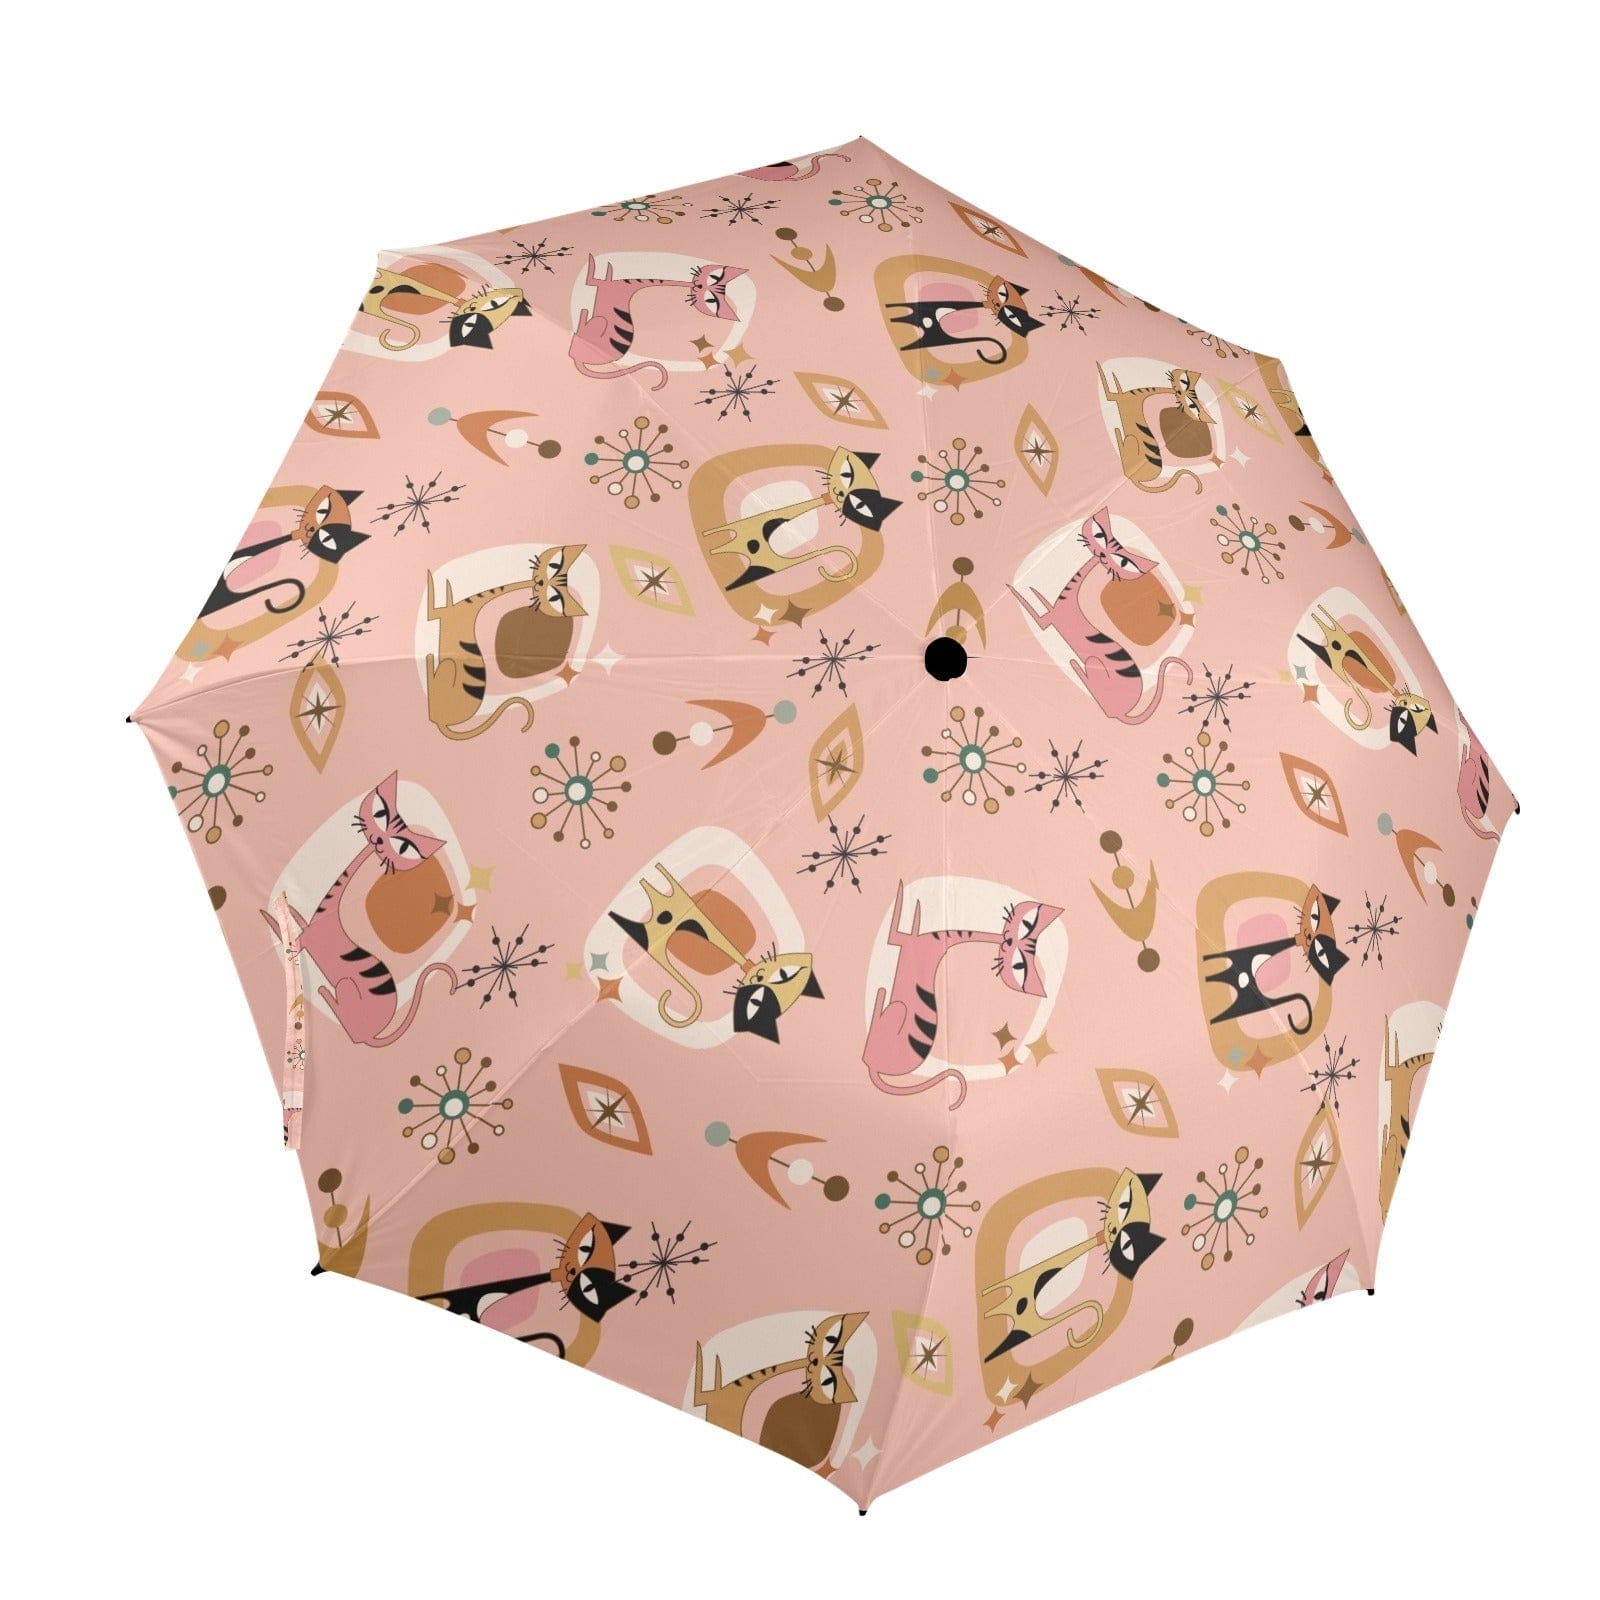 Groovy Mid Mod Vibes Retro Umbrella Rain or Sun One Size / Atomic Kittie Cats Semi-Automatic Foldable Umbrella (Model U12)